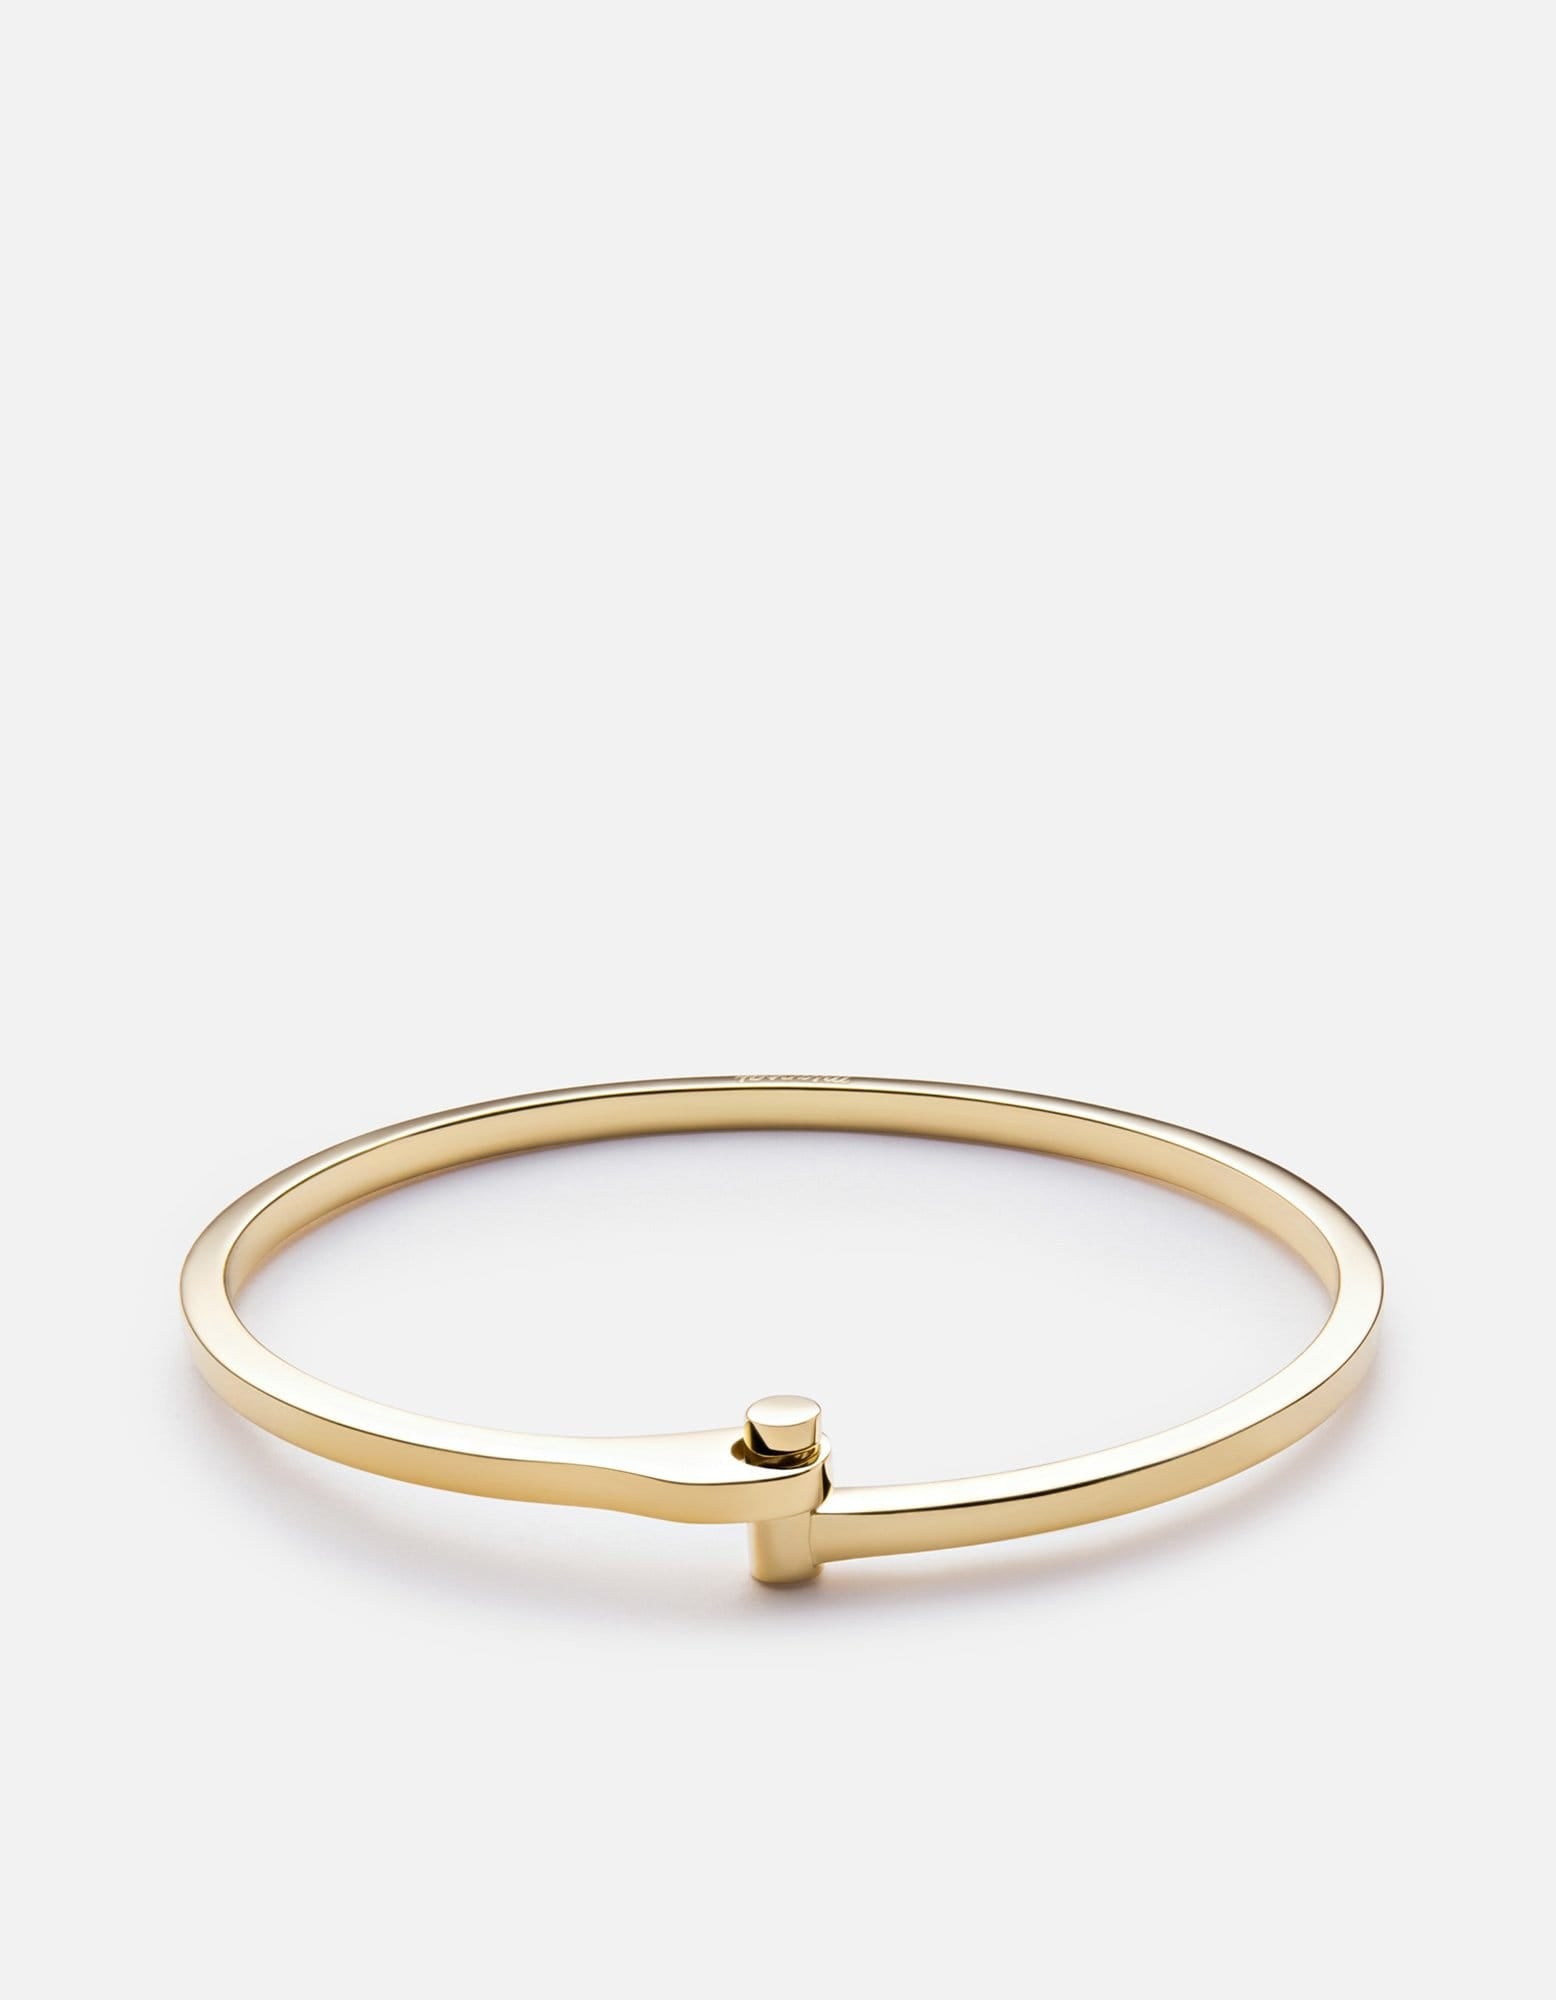 Nyx Cuff Bracelet, Gold Vermeil, Polished | Women's Cuffs | Miansai